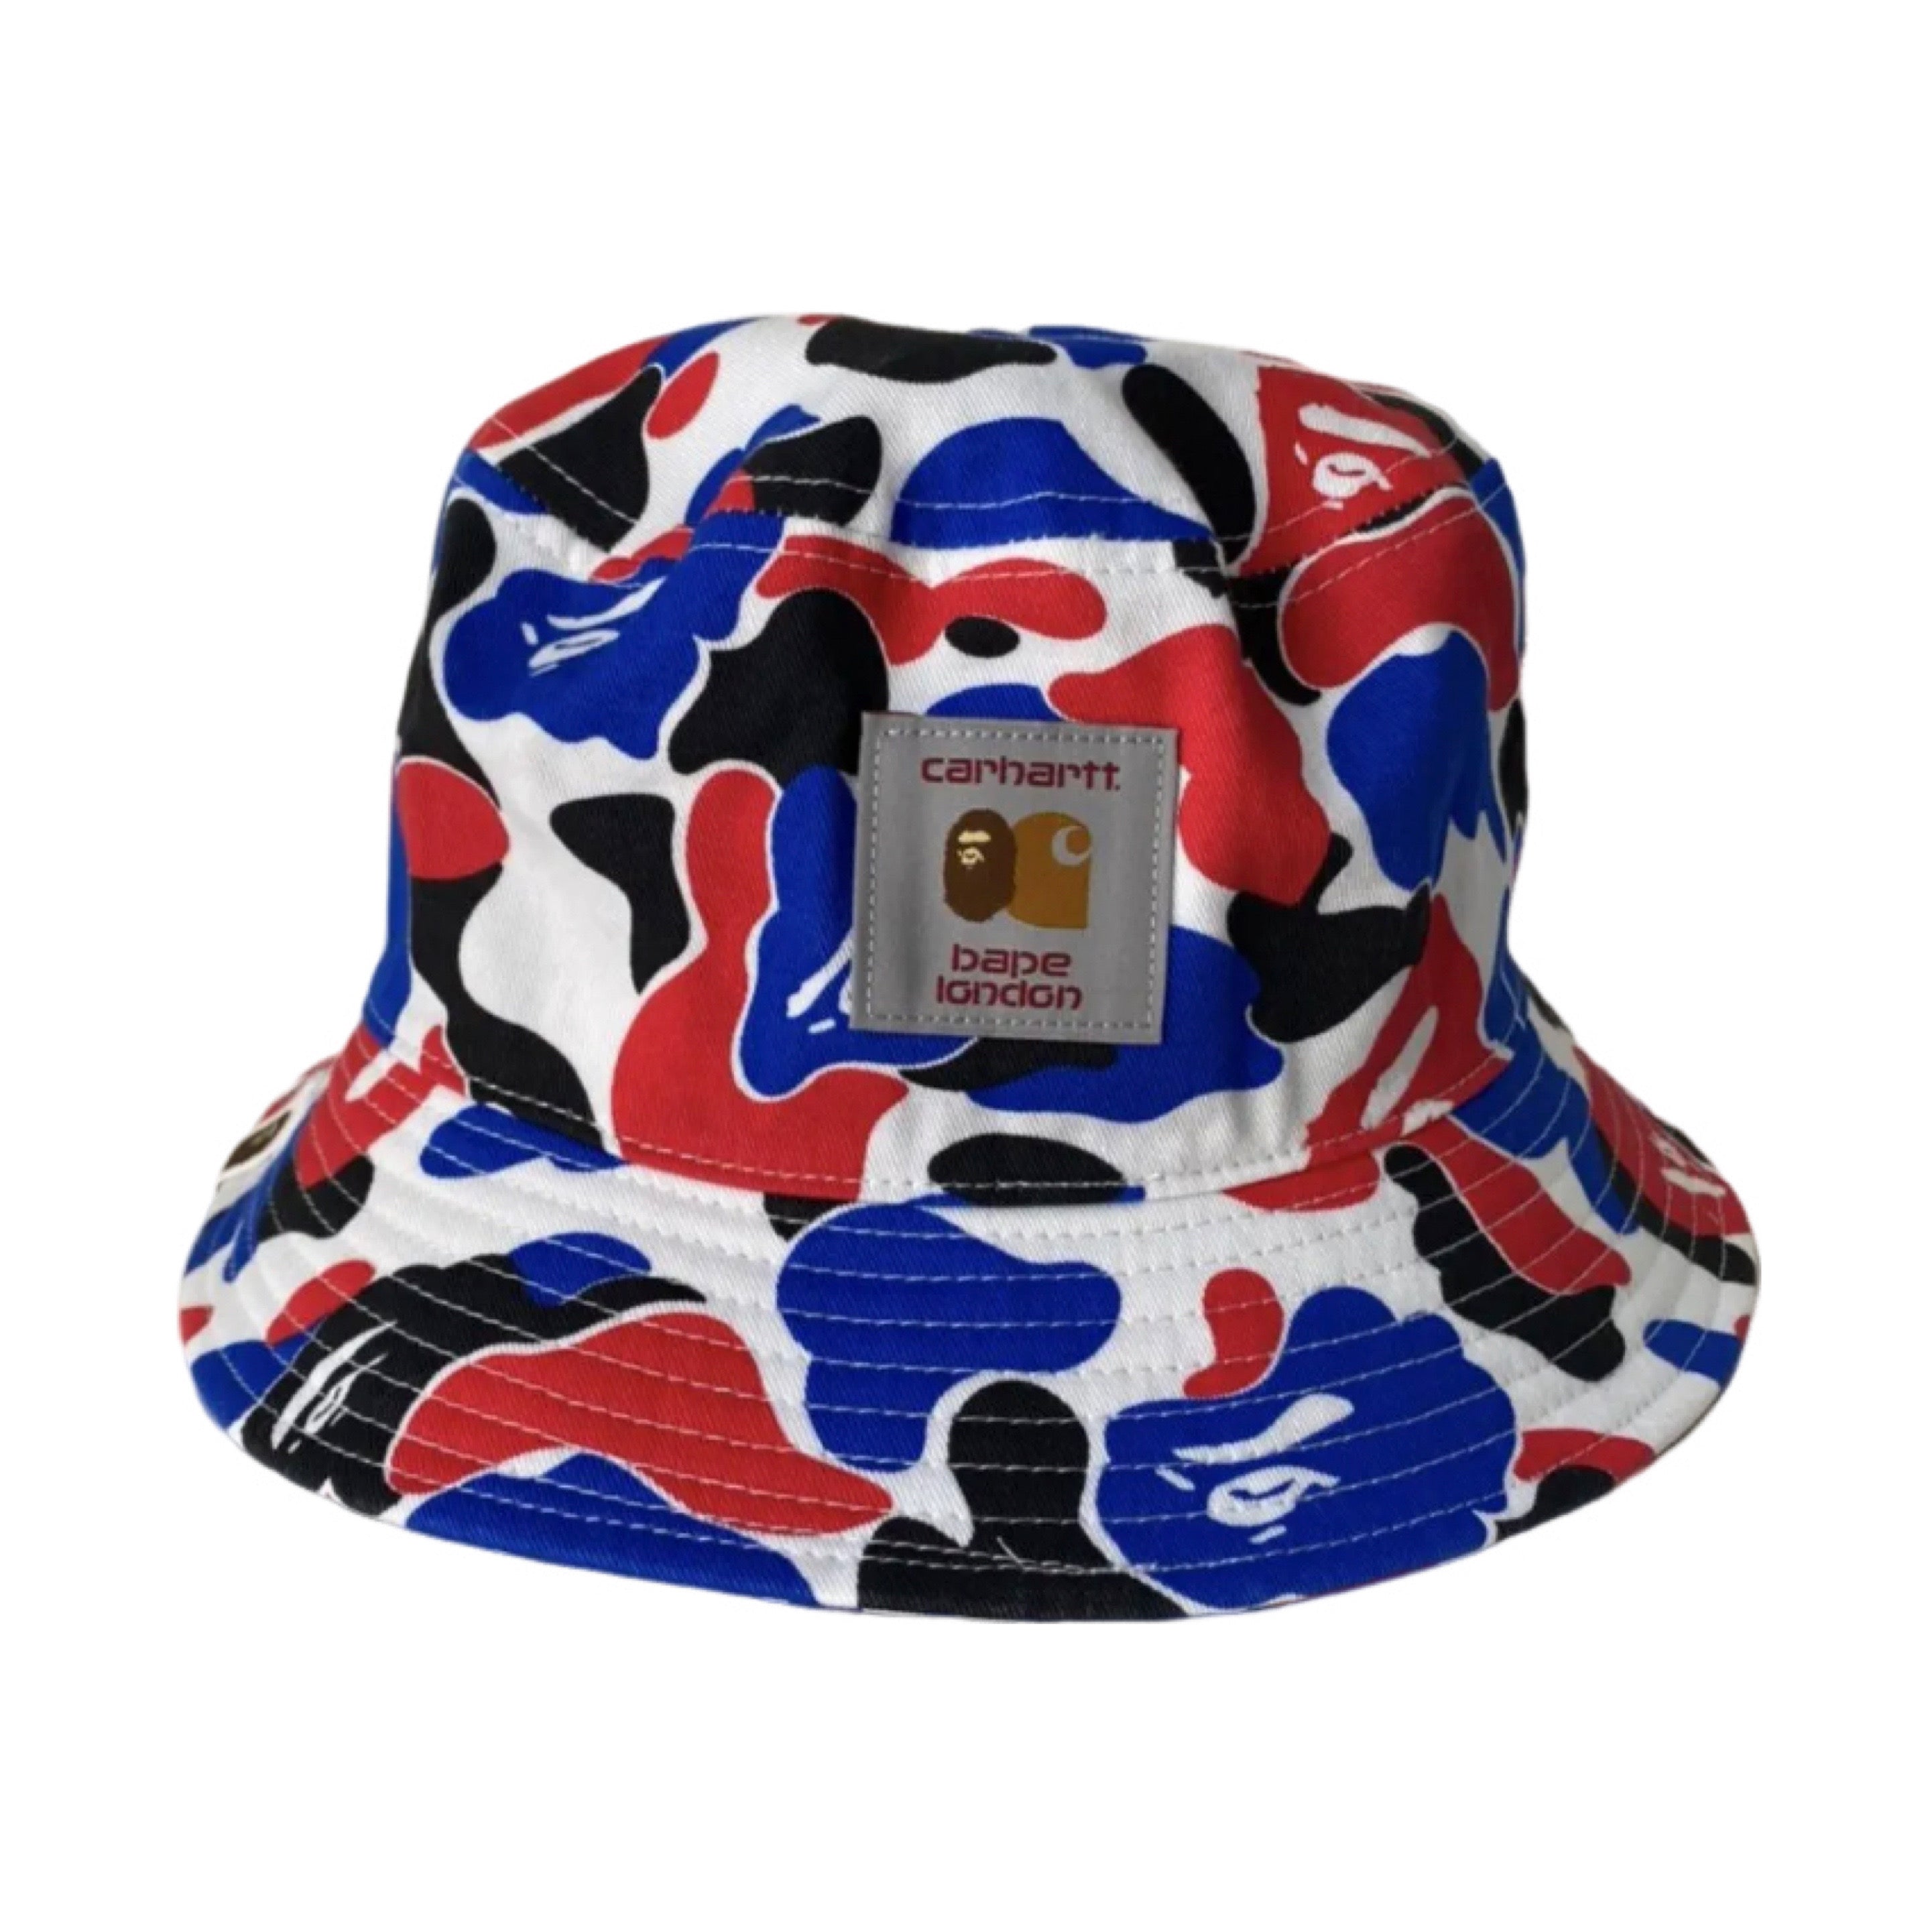 Bape Carhartt Bucket Hat London Store Exclusive Union Jack Camouflage